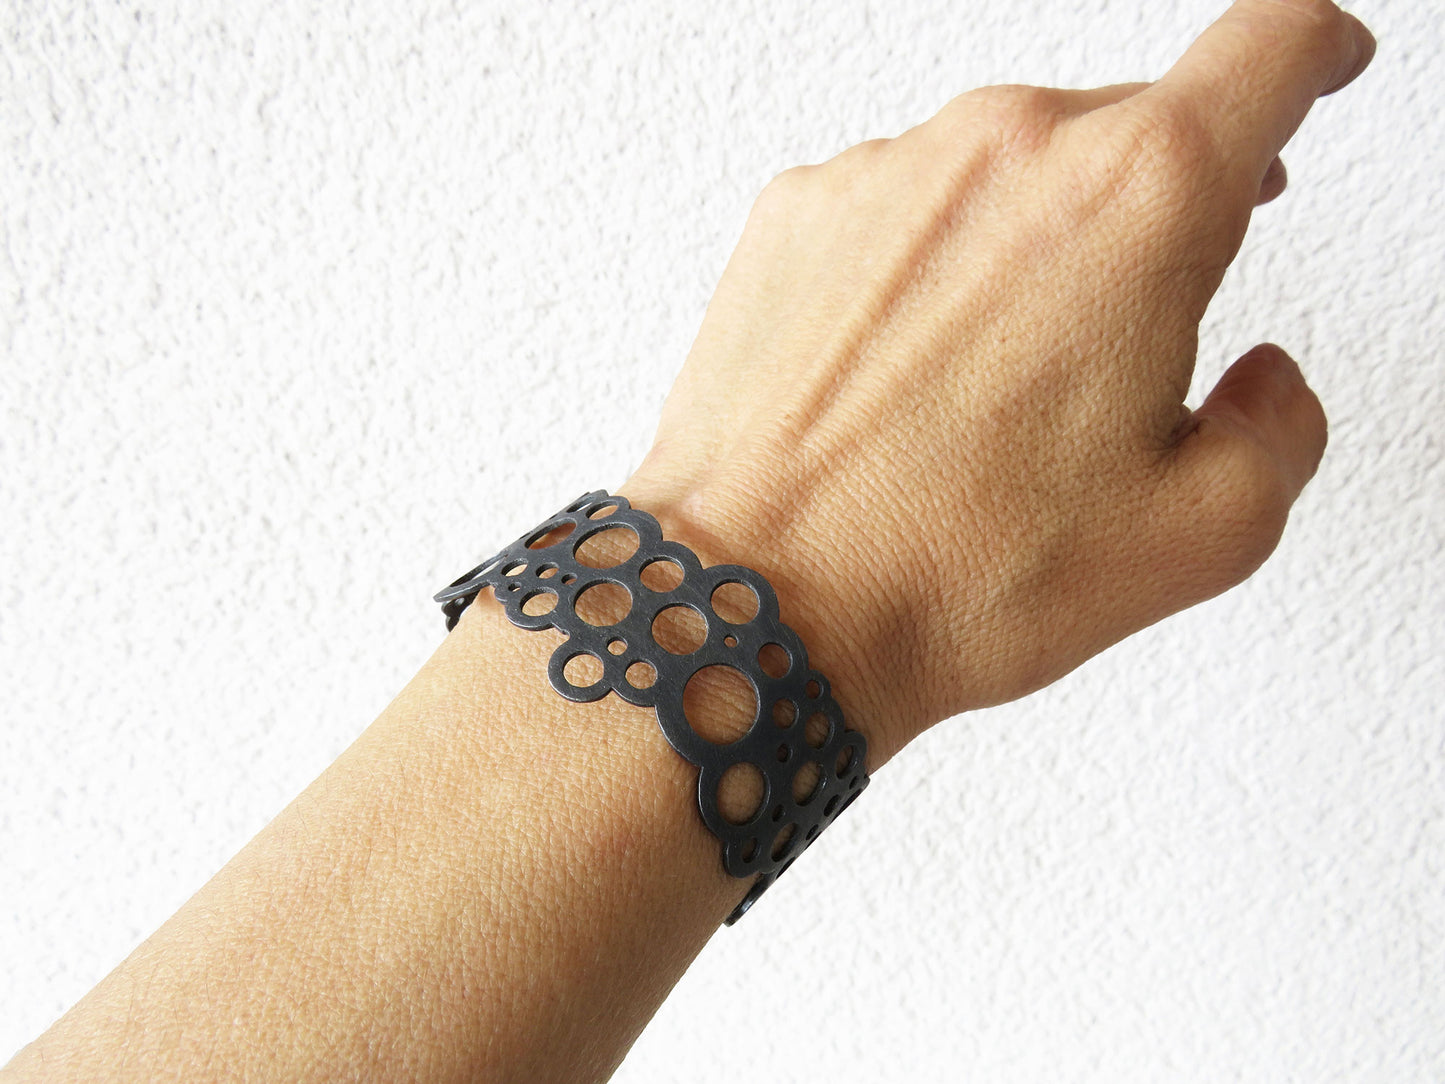 Circles Geometric Oxidized Silver Cuff Bracelet | KimyaJoyas